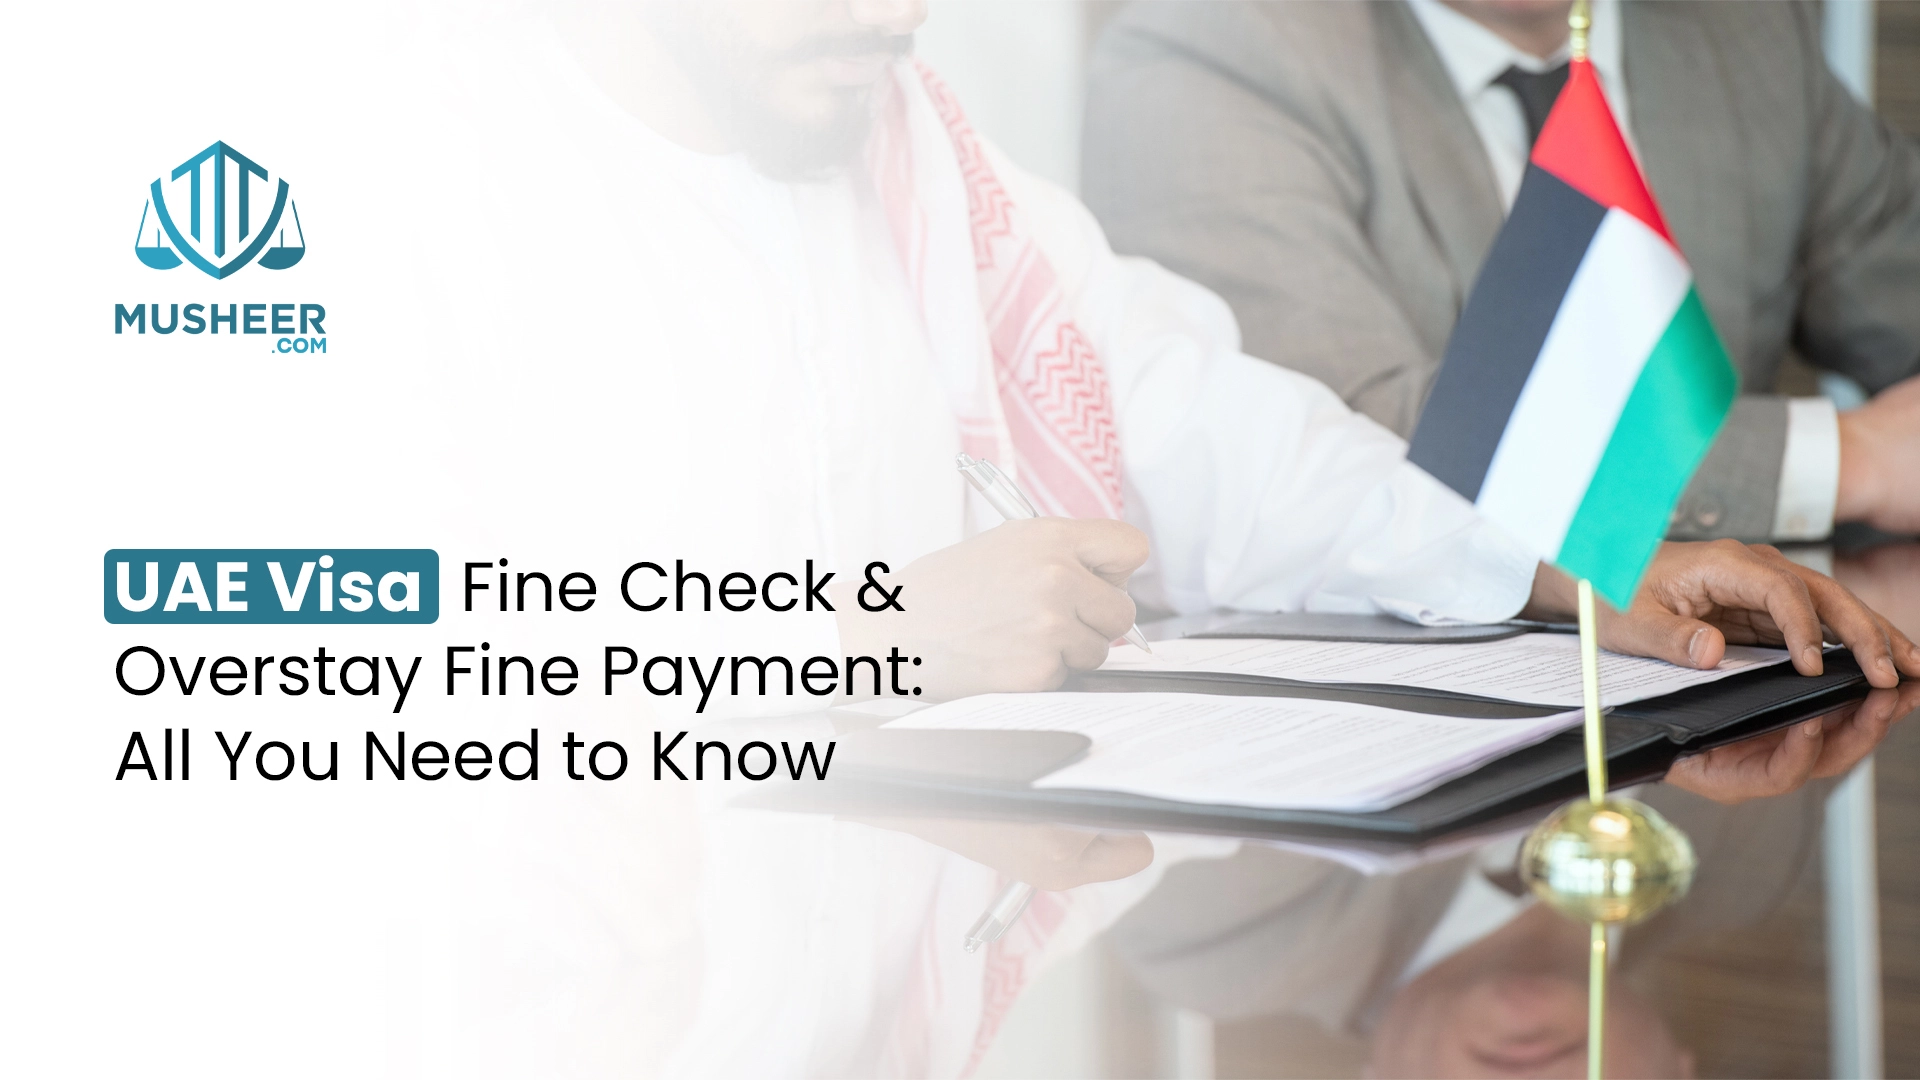 UAE Visa Fine Check & Overstay Fine Payment